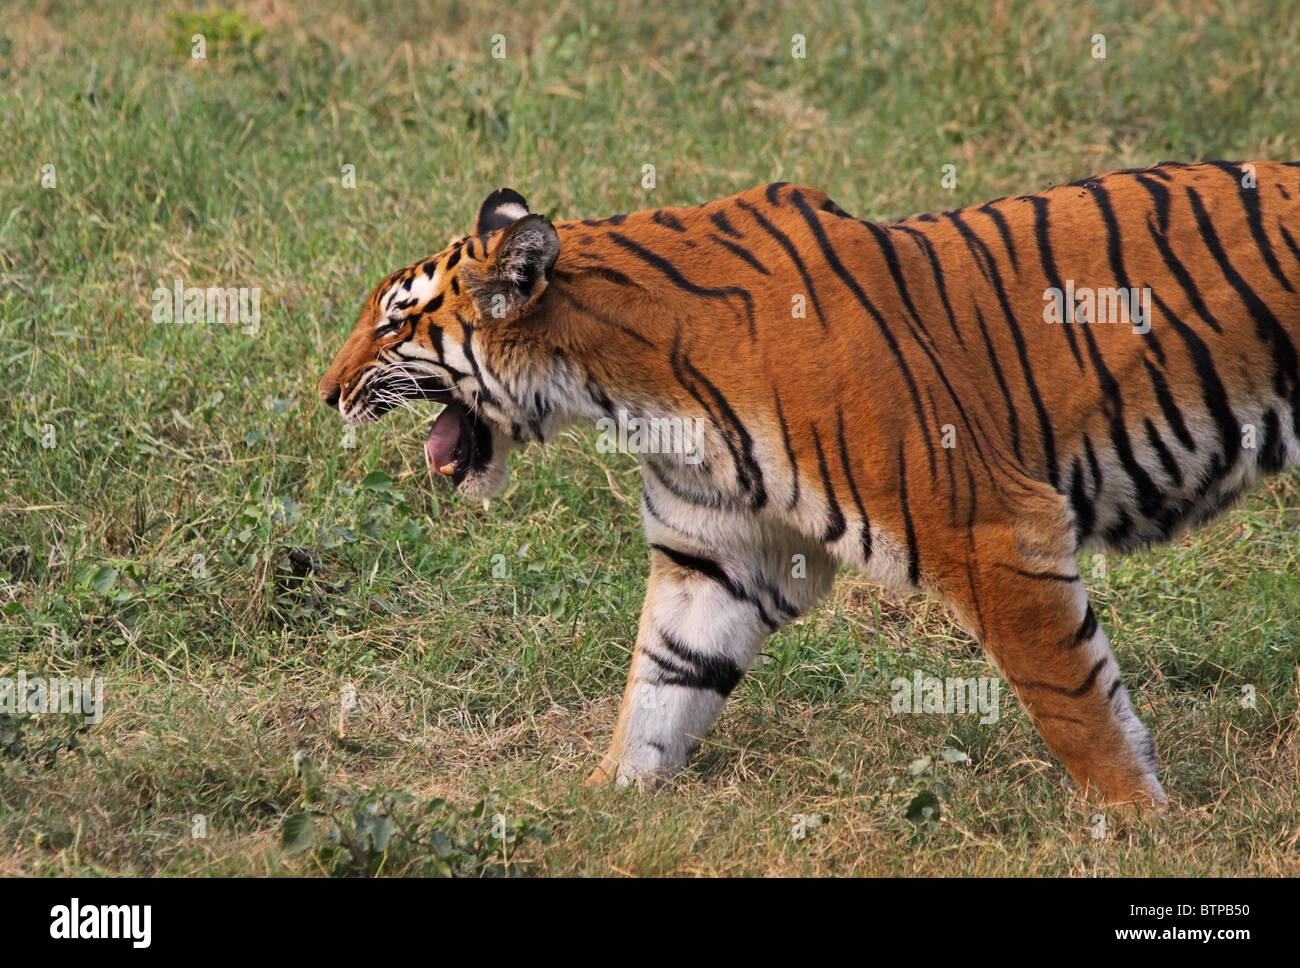 Alert Tiger walking inside it's enclosure in New Delhi Zoo, India Stock Photo